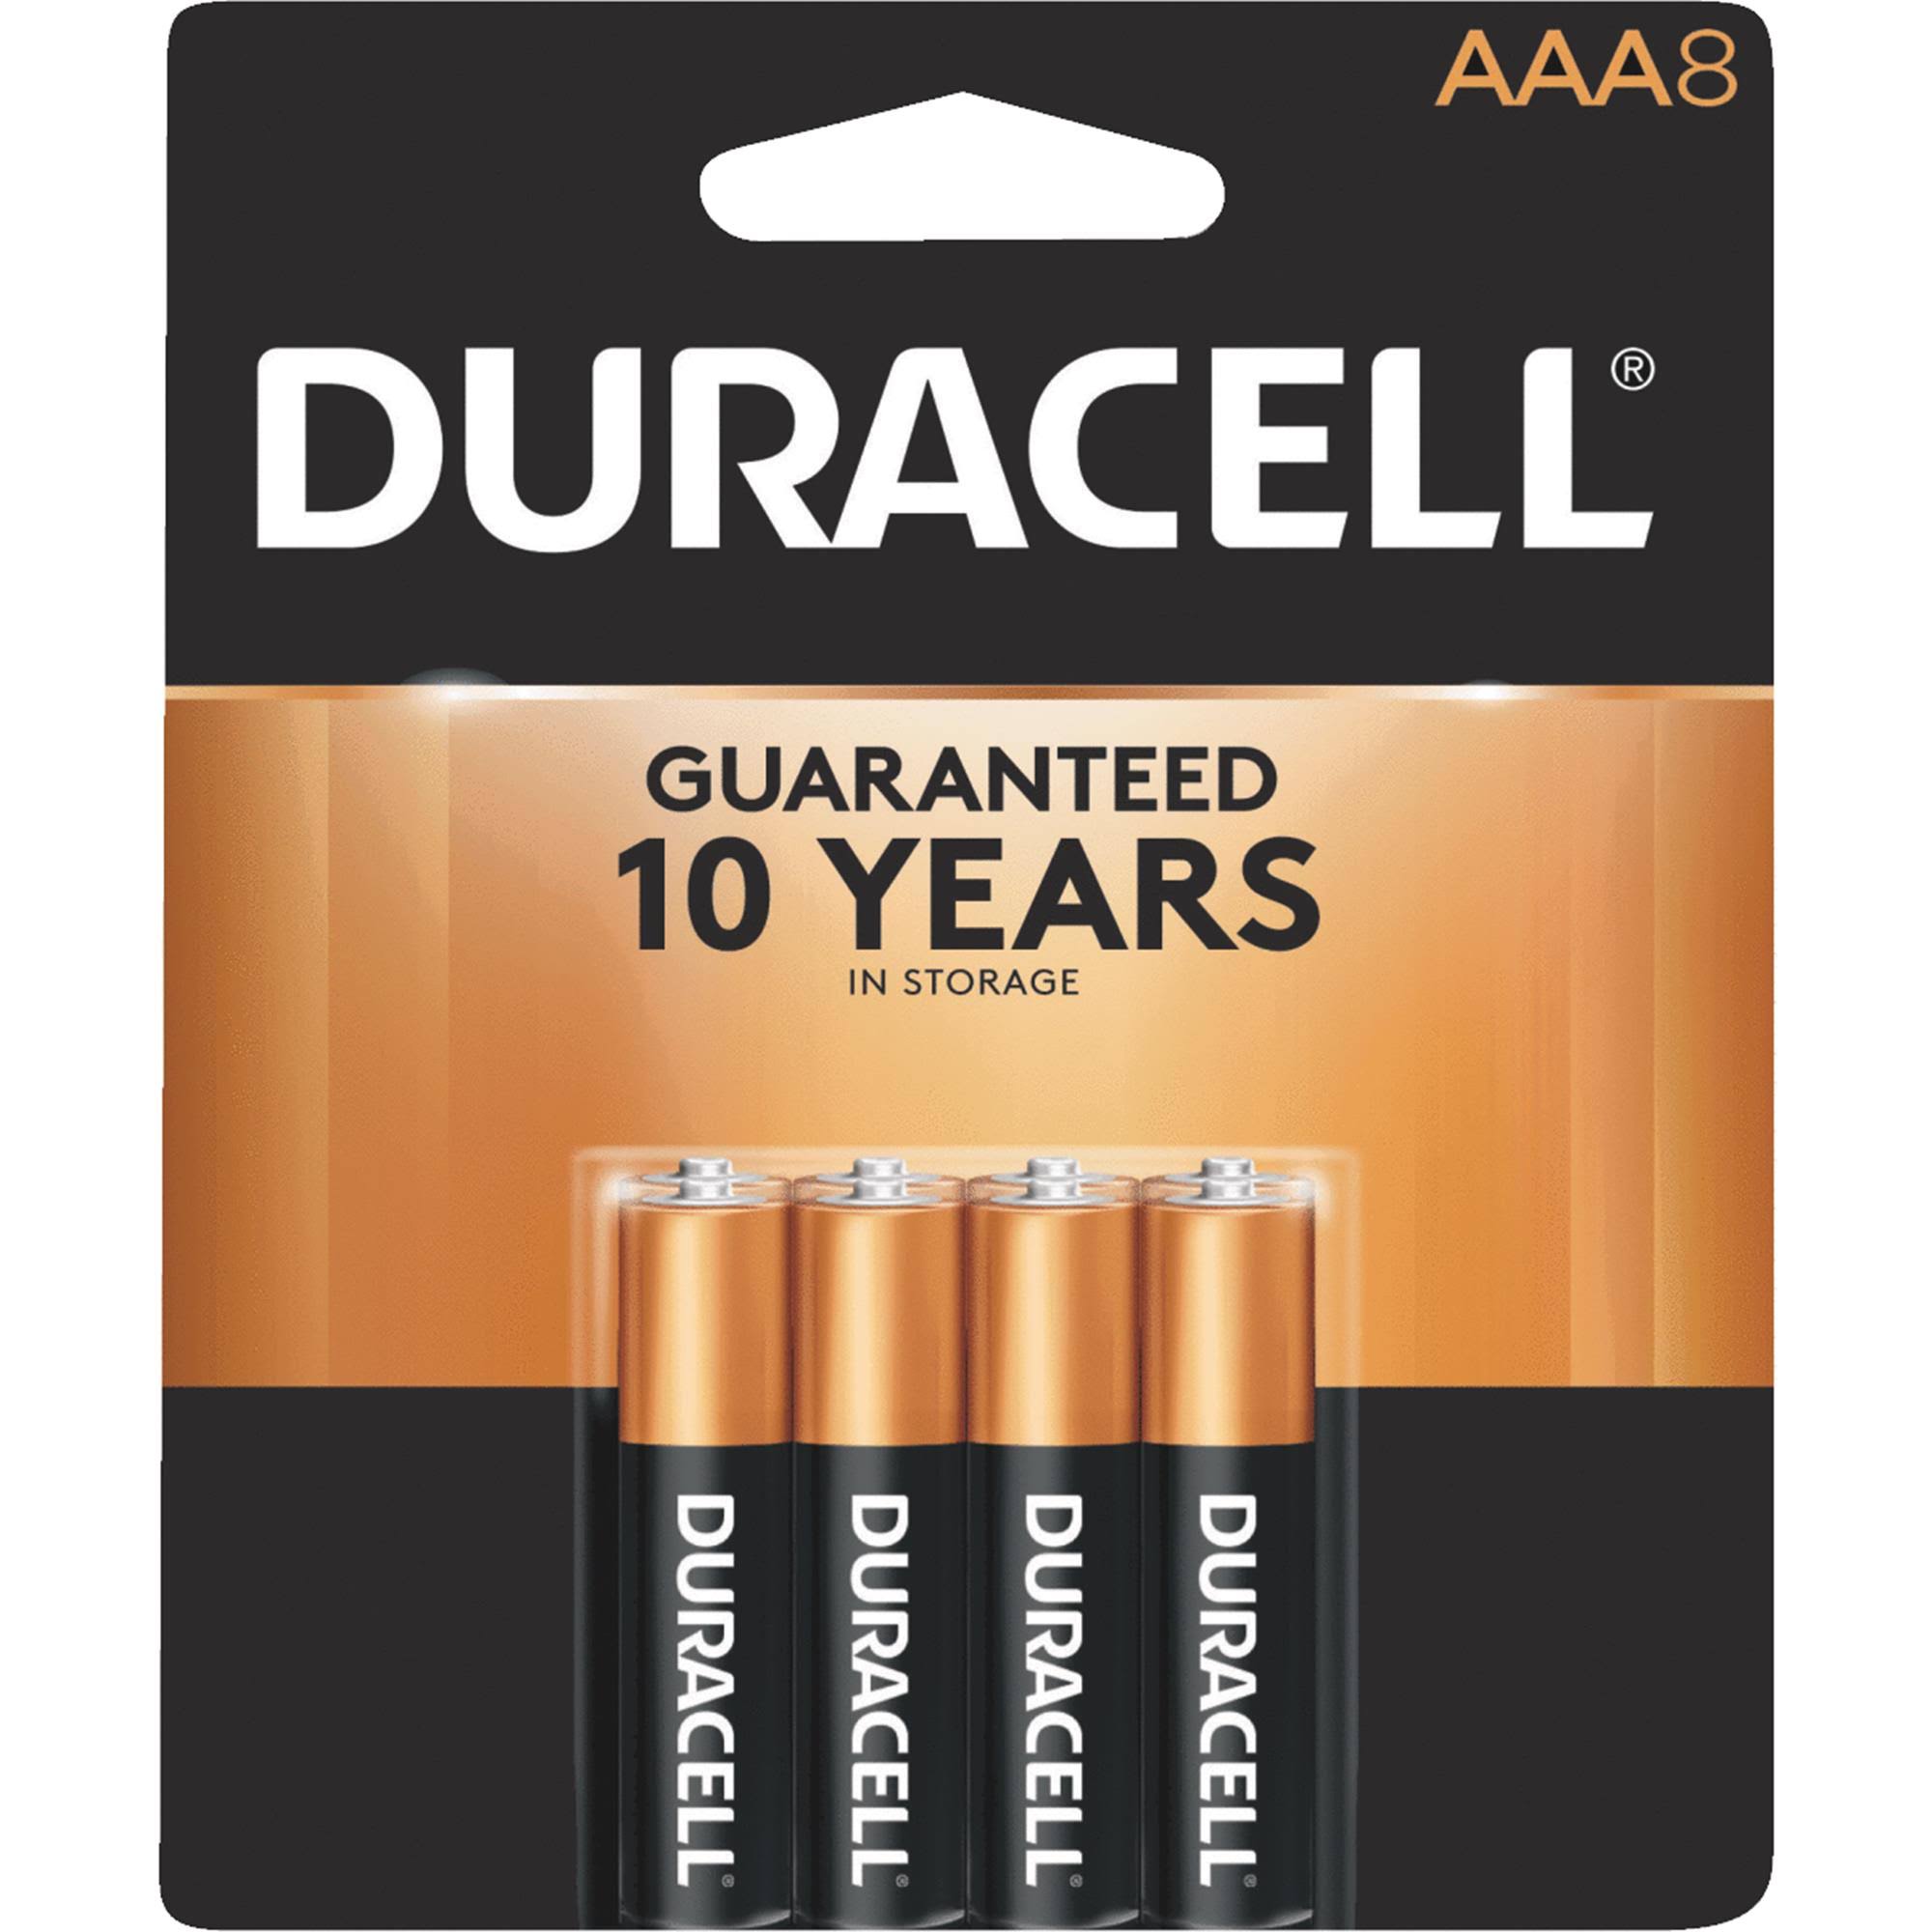 Duracell Coppertop AAA Alkaline Batteries - 8 pack